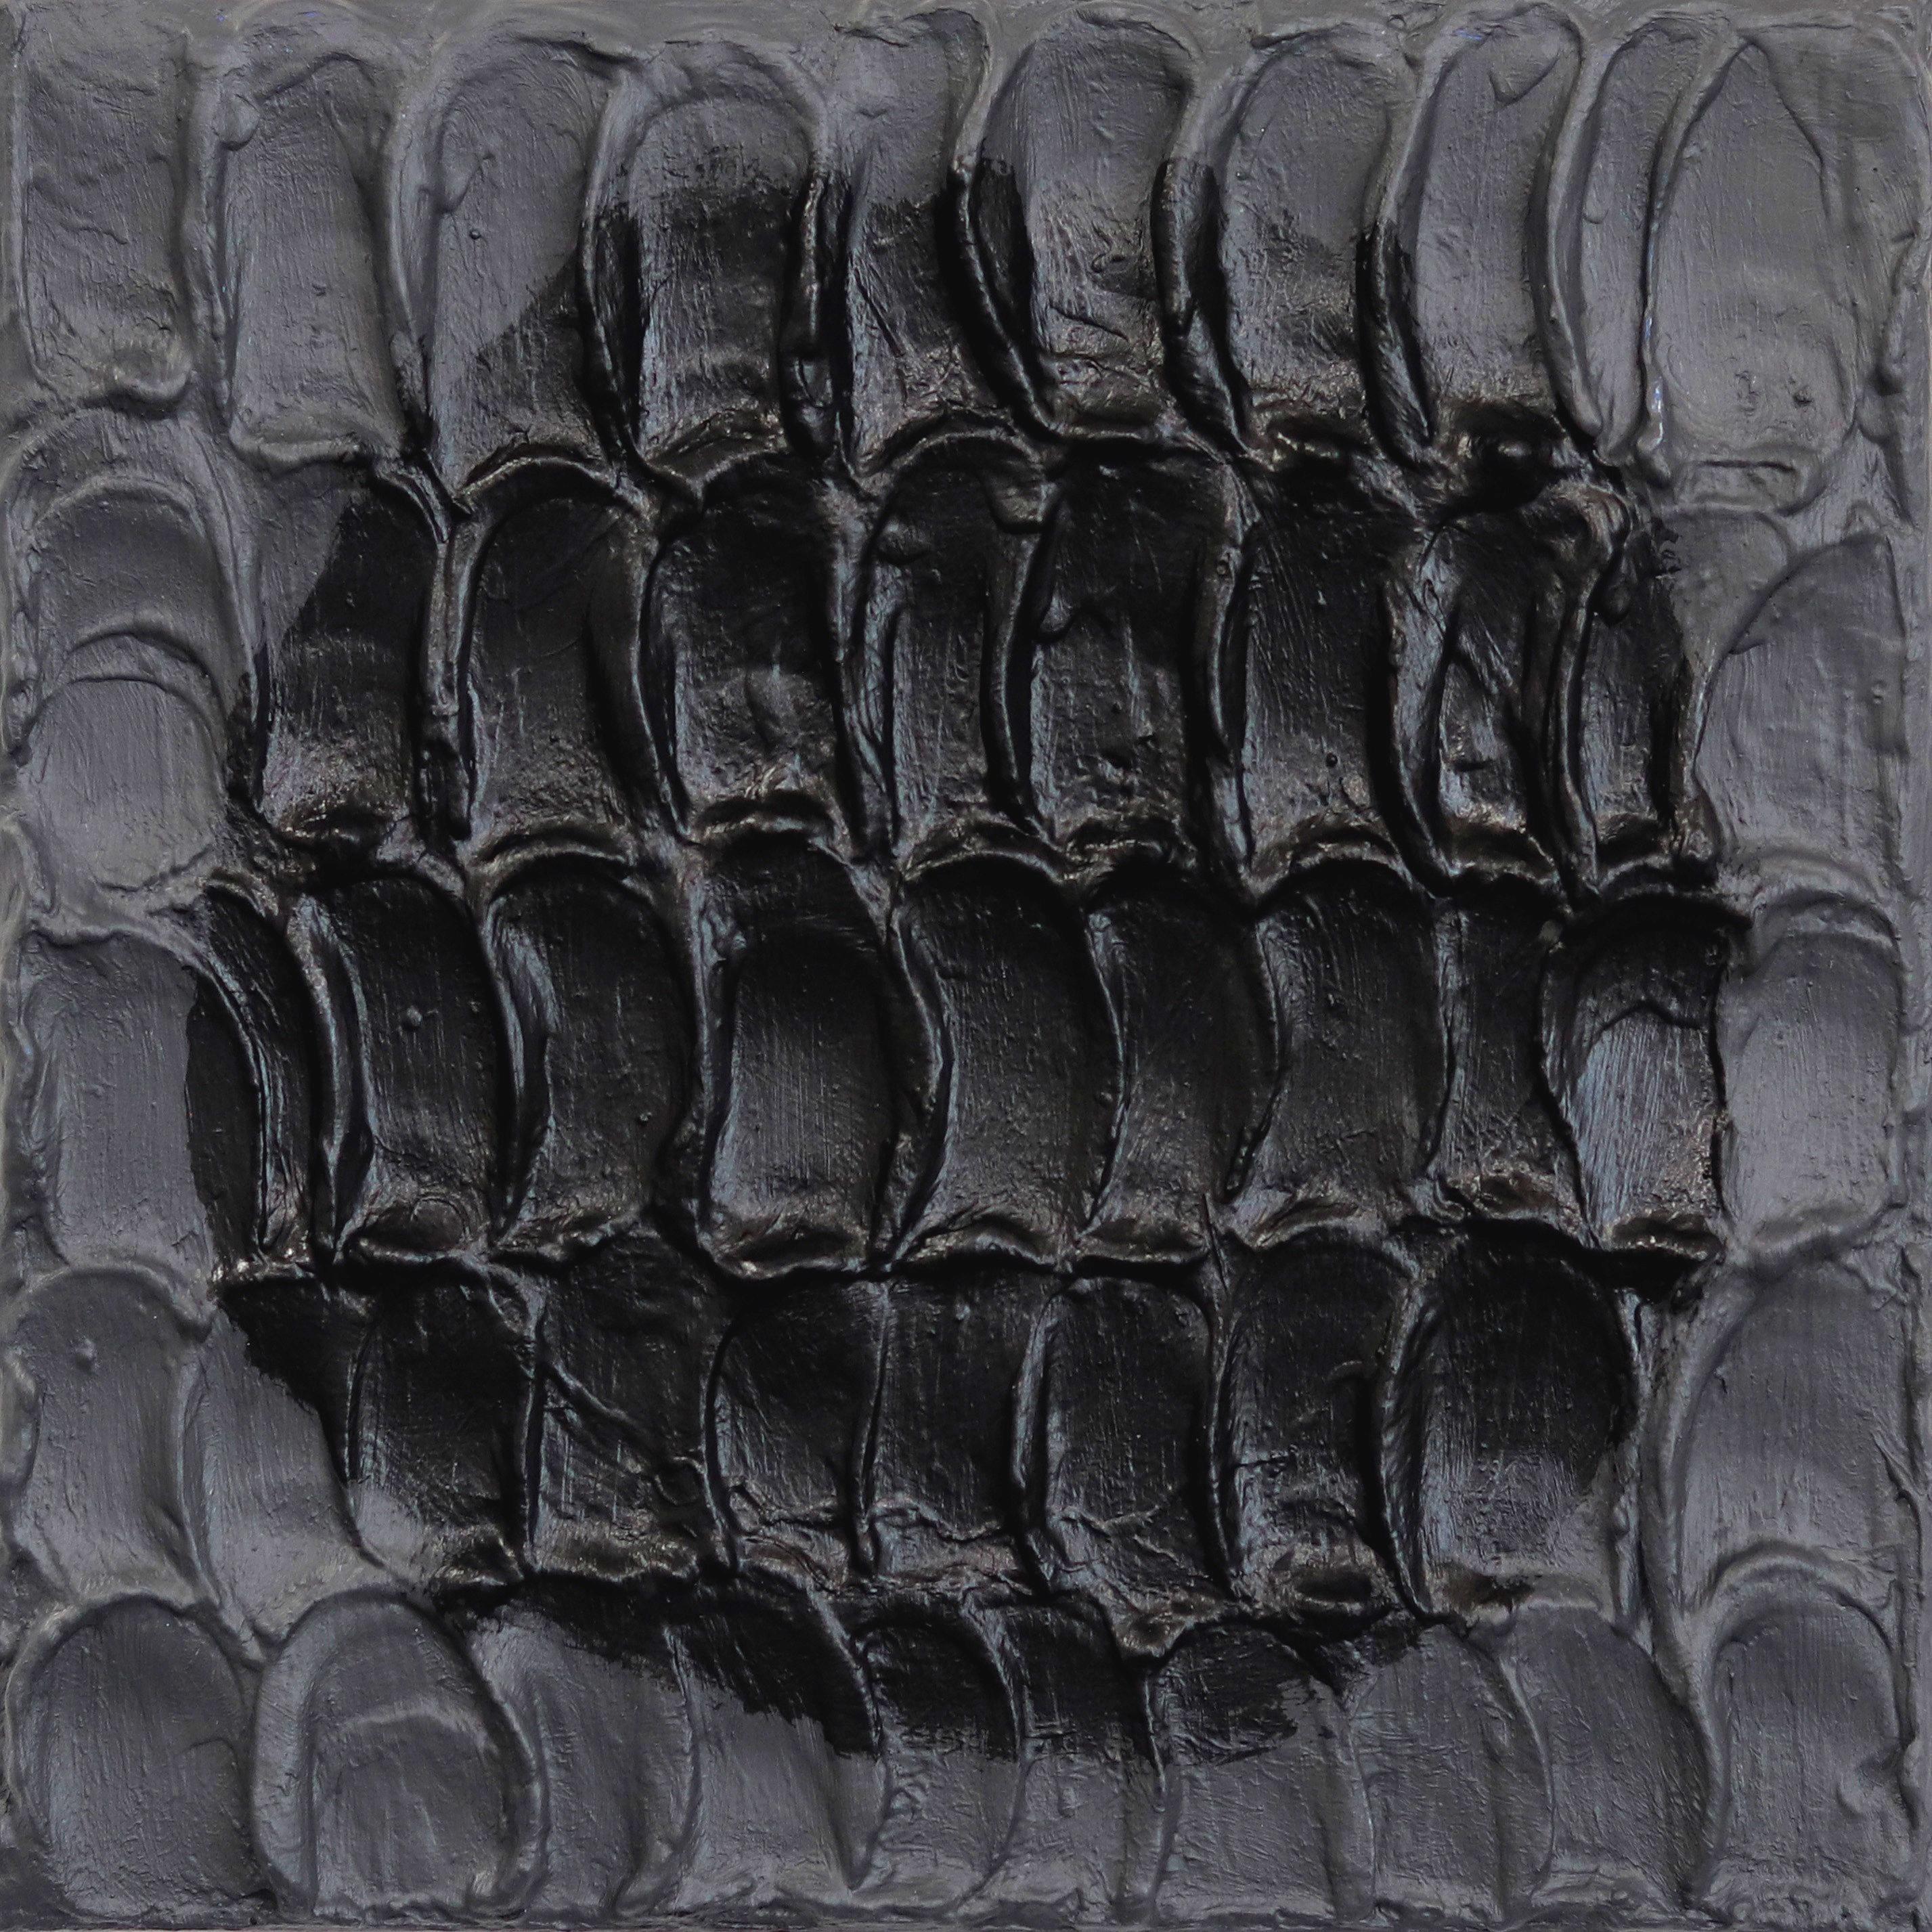 Len Klikunas Abstract Painting - Primitive Modern #1 - Textural Abstract Minimalist Artwork on Canvas